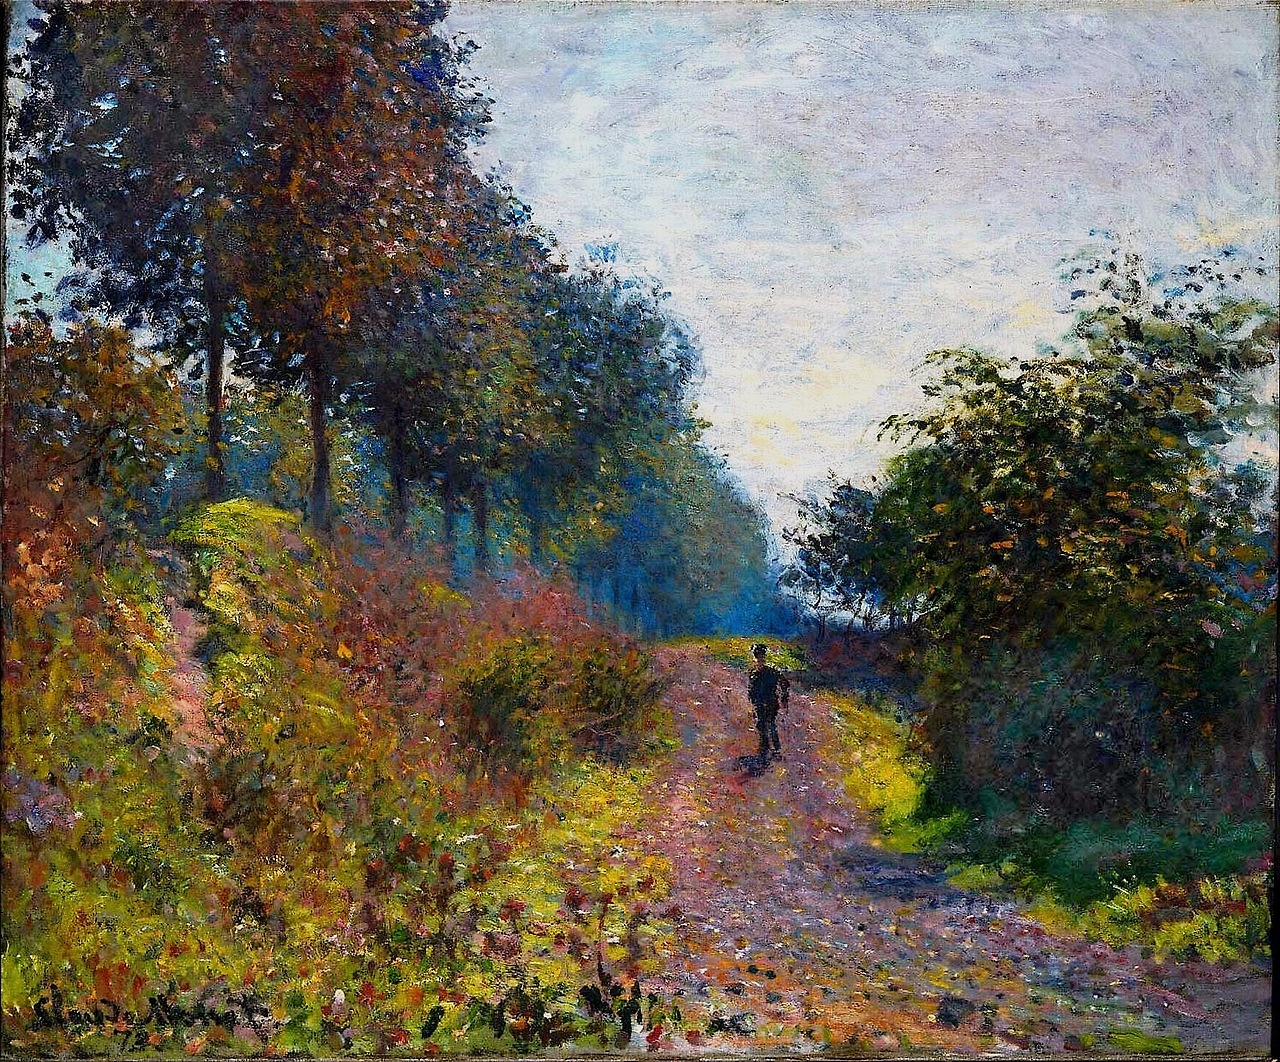 Claude+Monet-1840-1926 (822).jpg